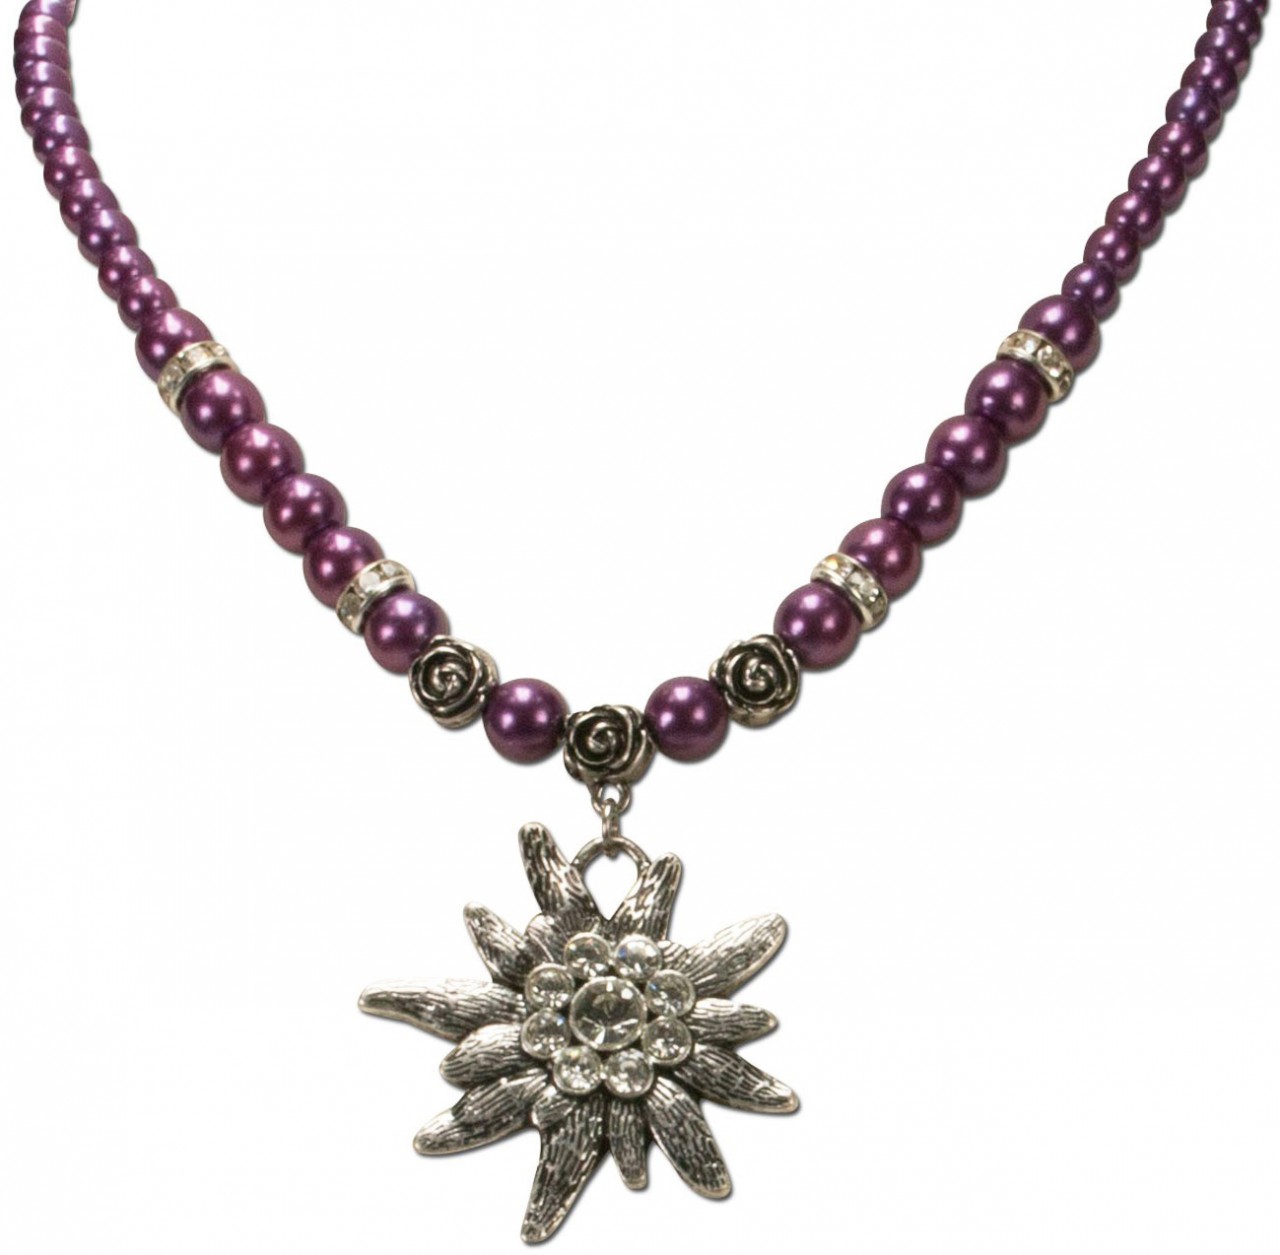 Aperçu: Collier de perles gros edelweiss violet